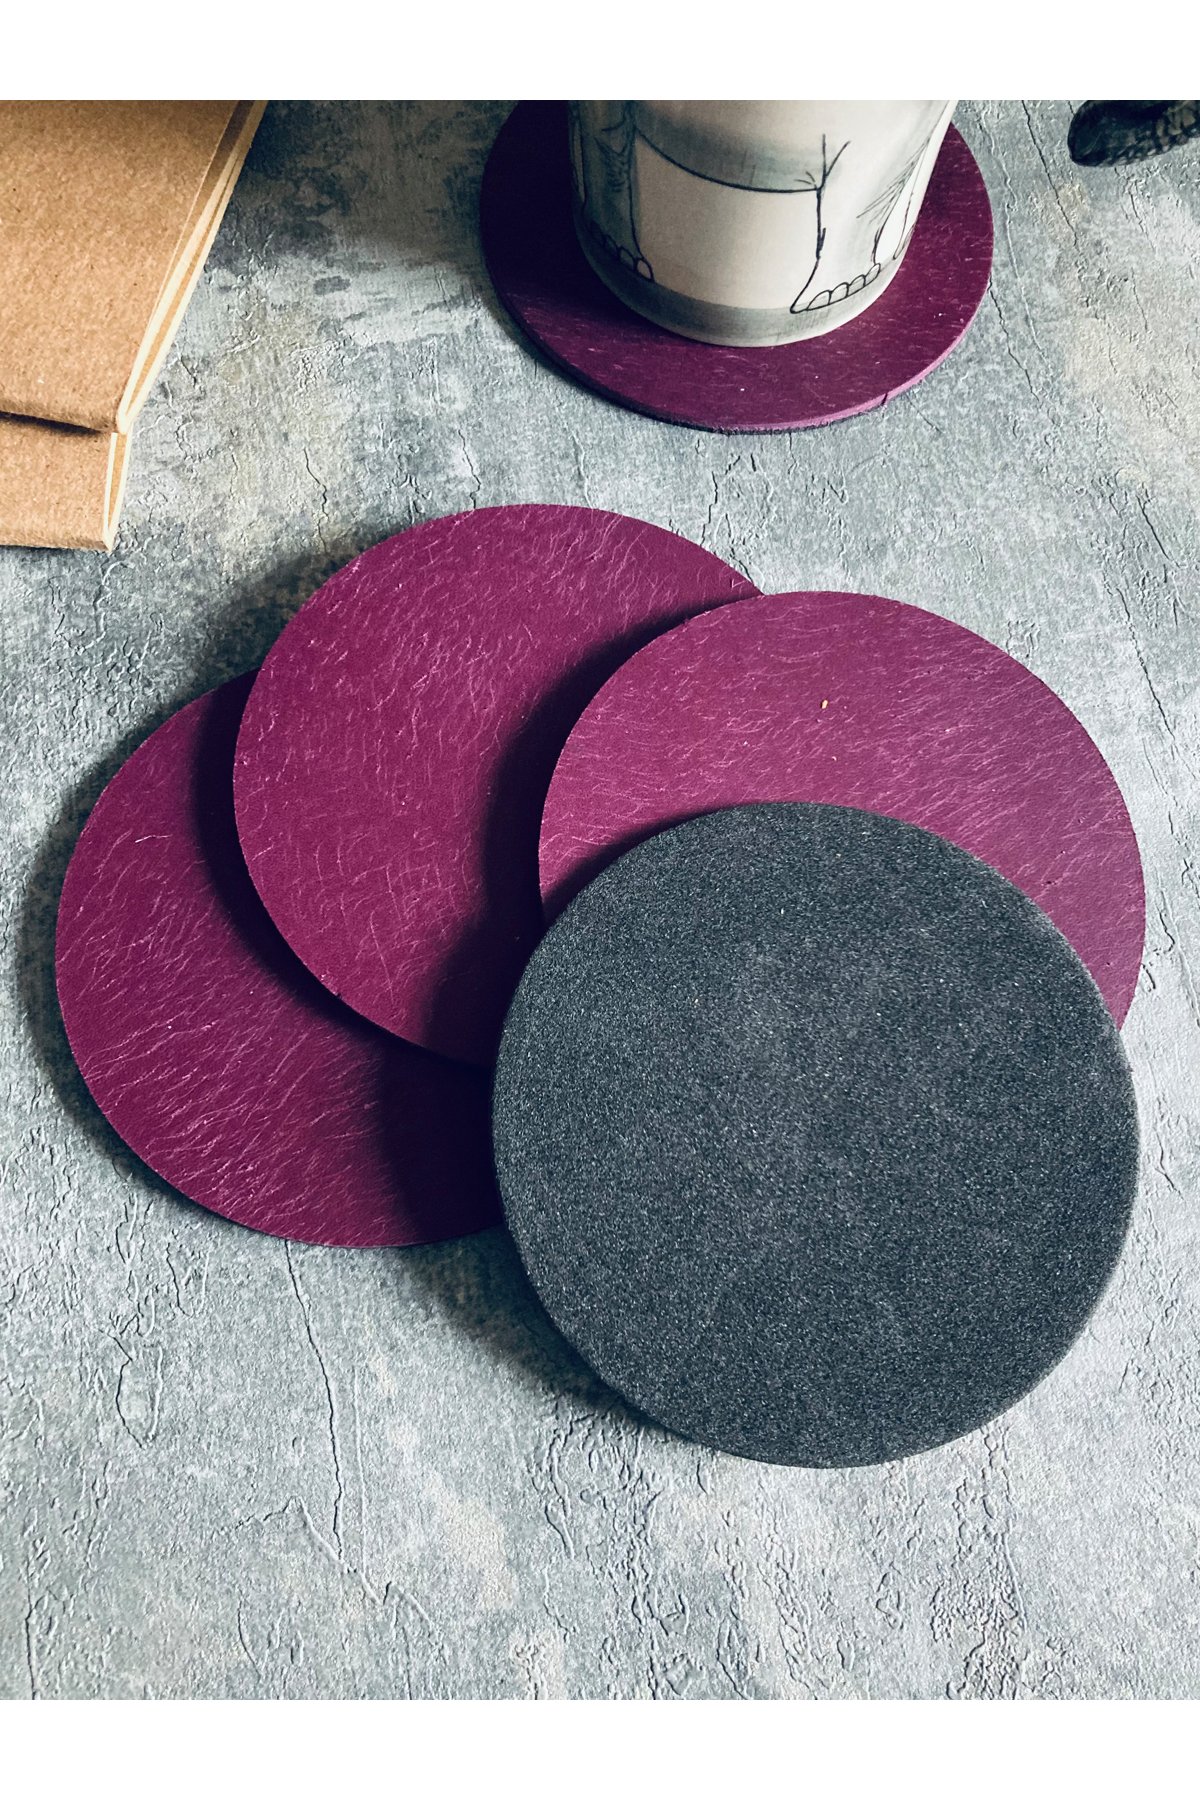 Set of 4 Genuine Leather Round Coaster - Purple Leather | Bretya Leather